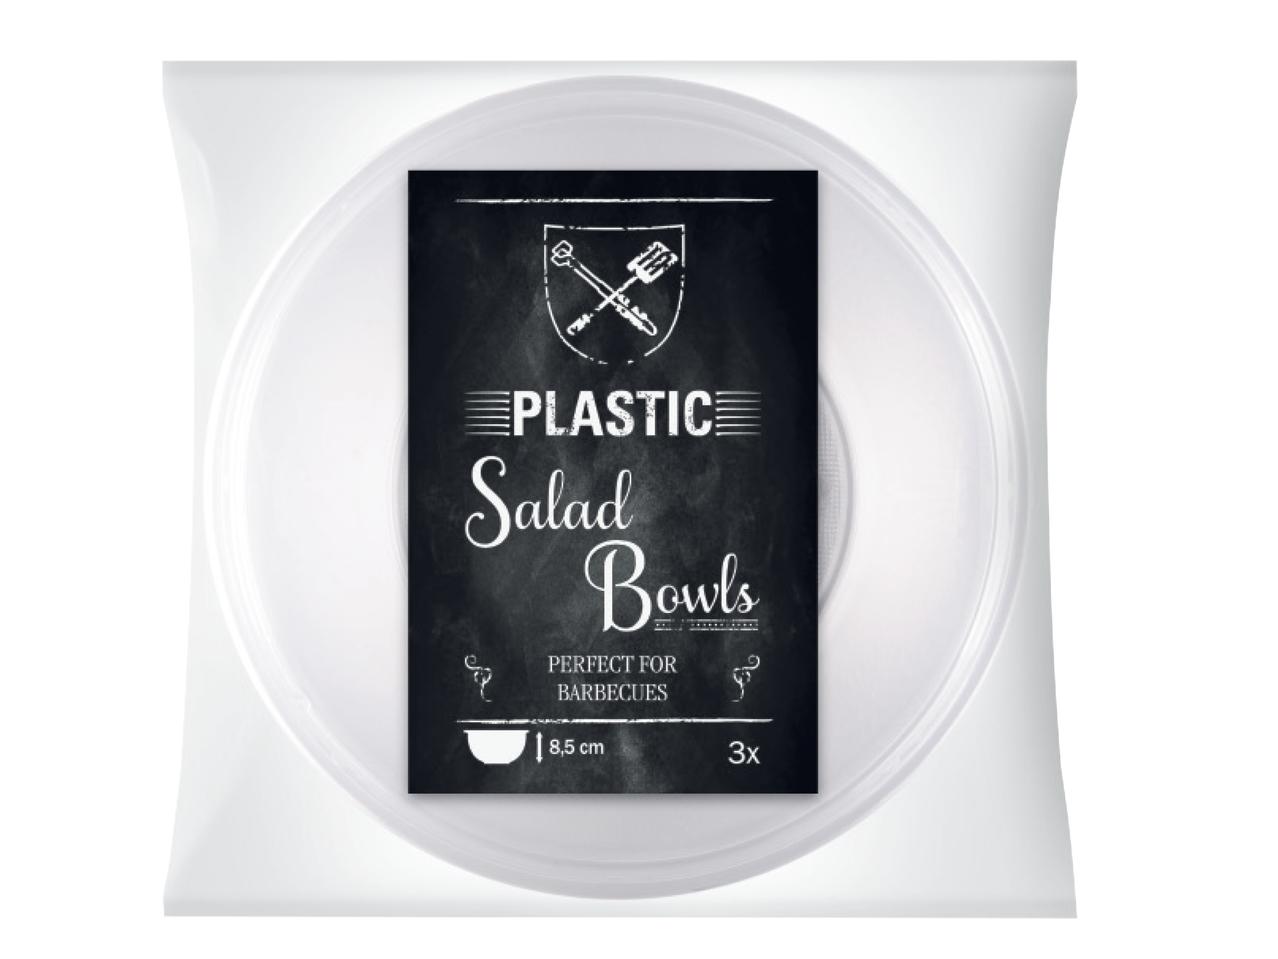 GRILLMEISTER Plastic Salad Bowls